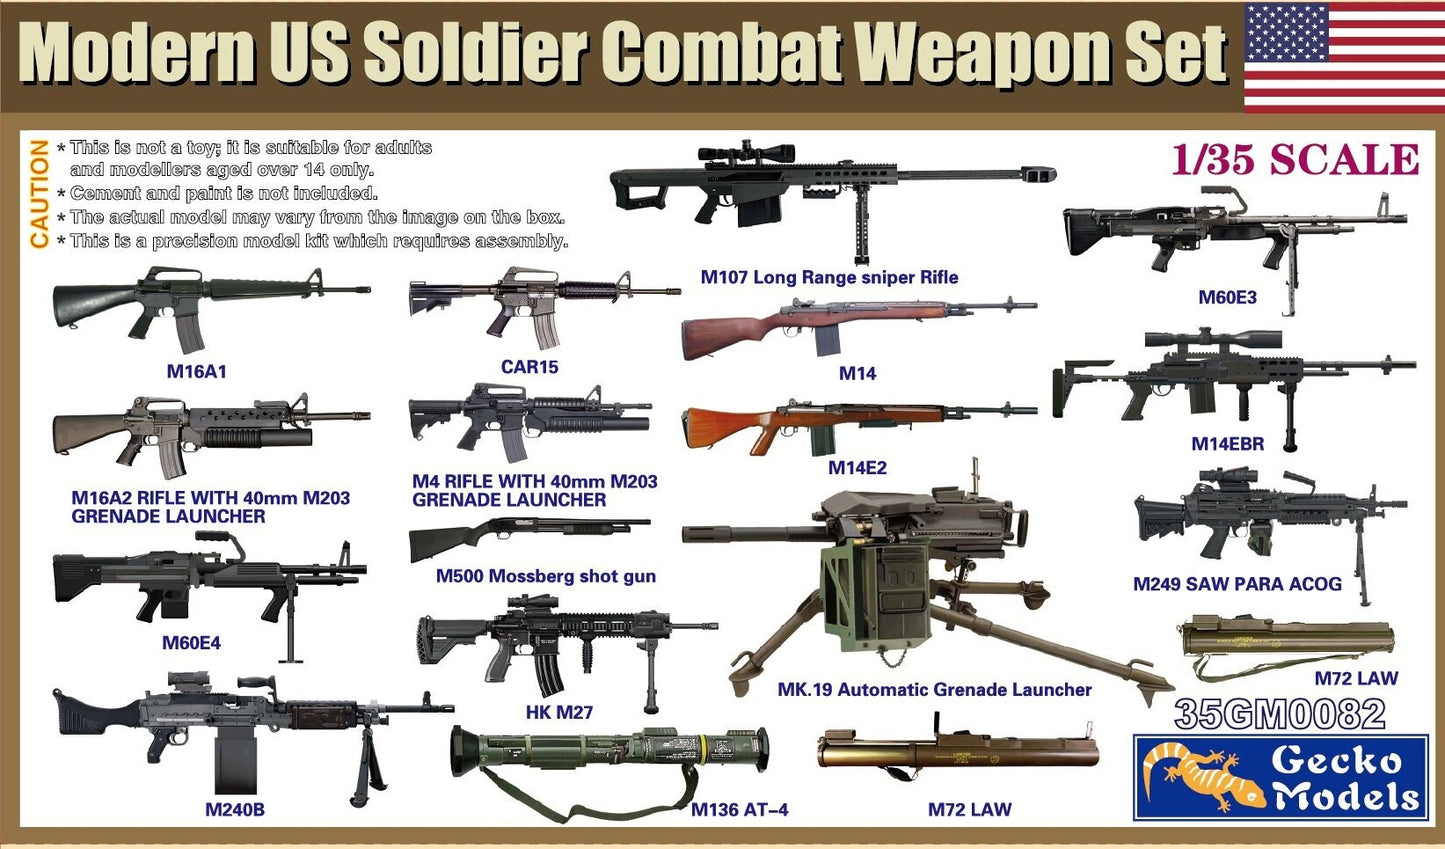 Gecko 1/35 Modern US Soldier Combat Weapon Set Plastic Model Kit